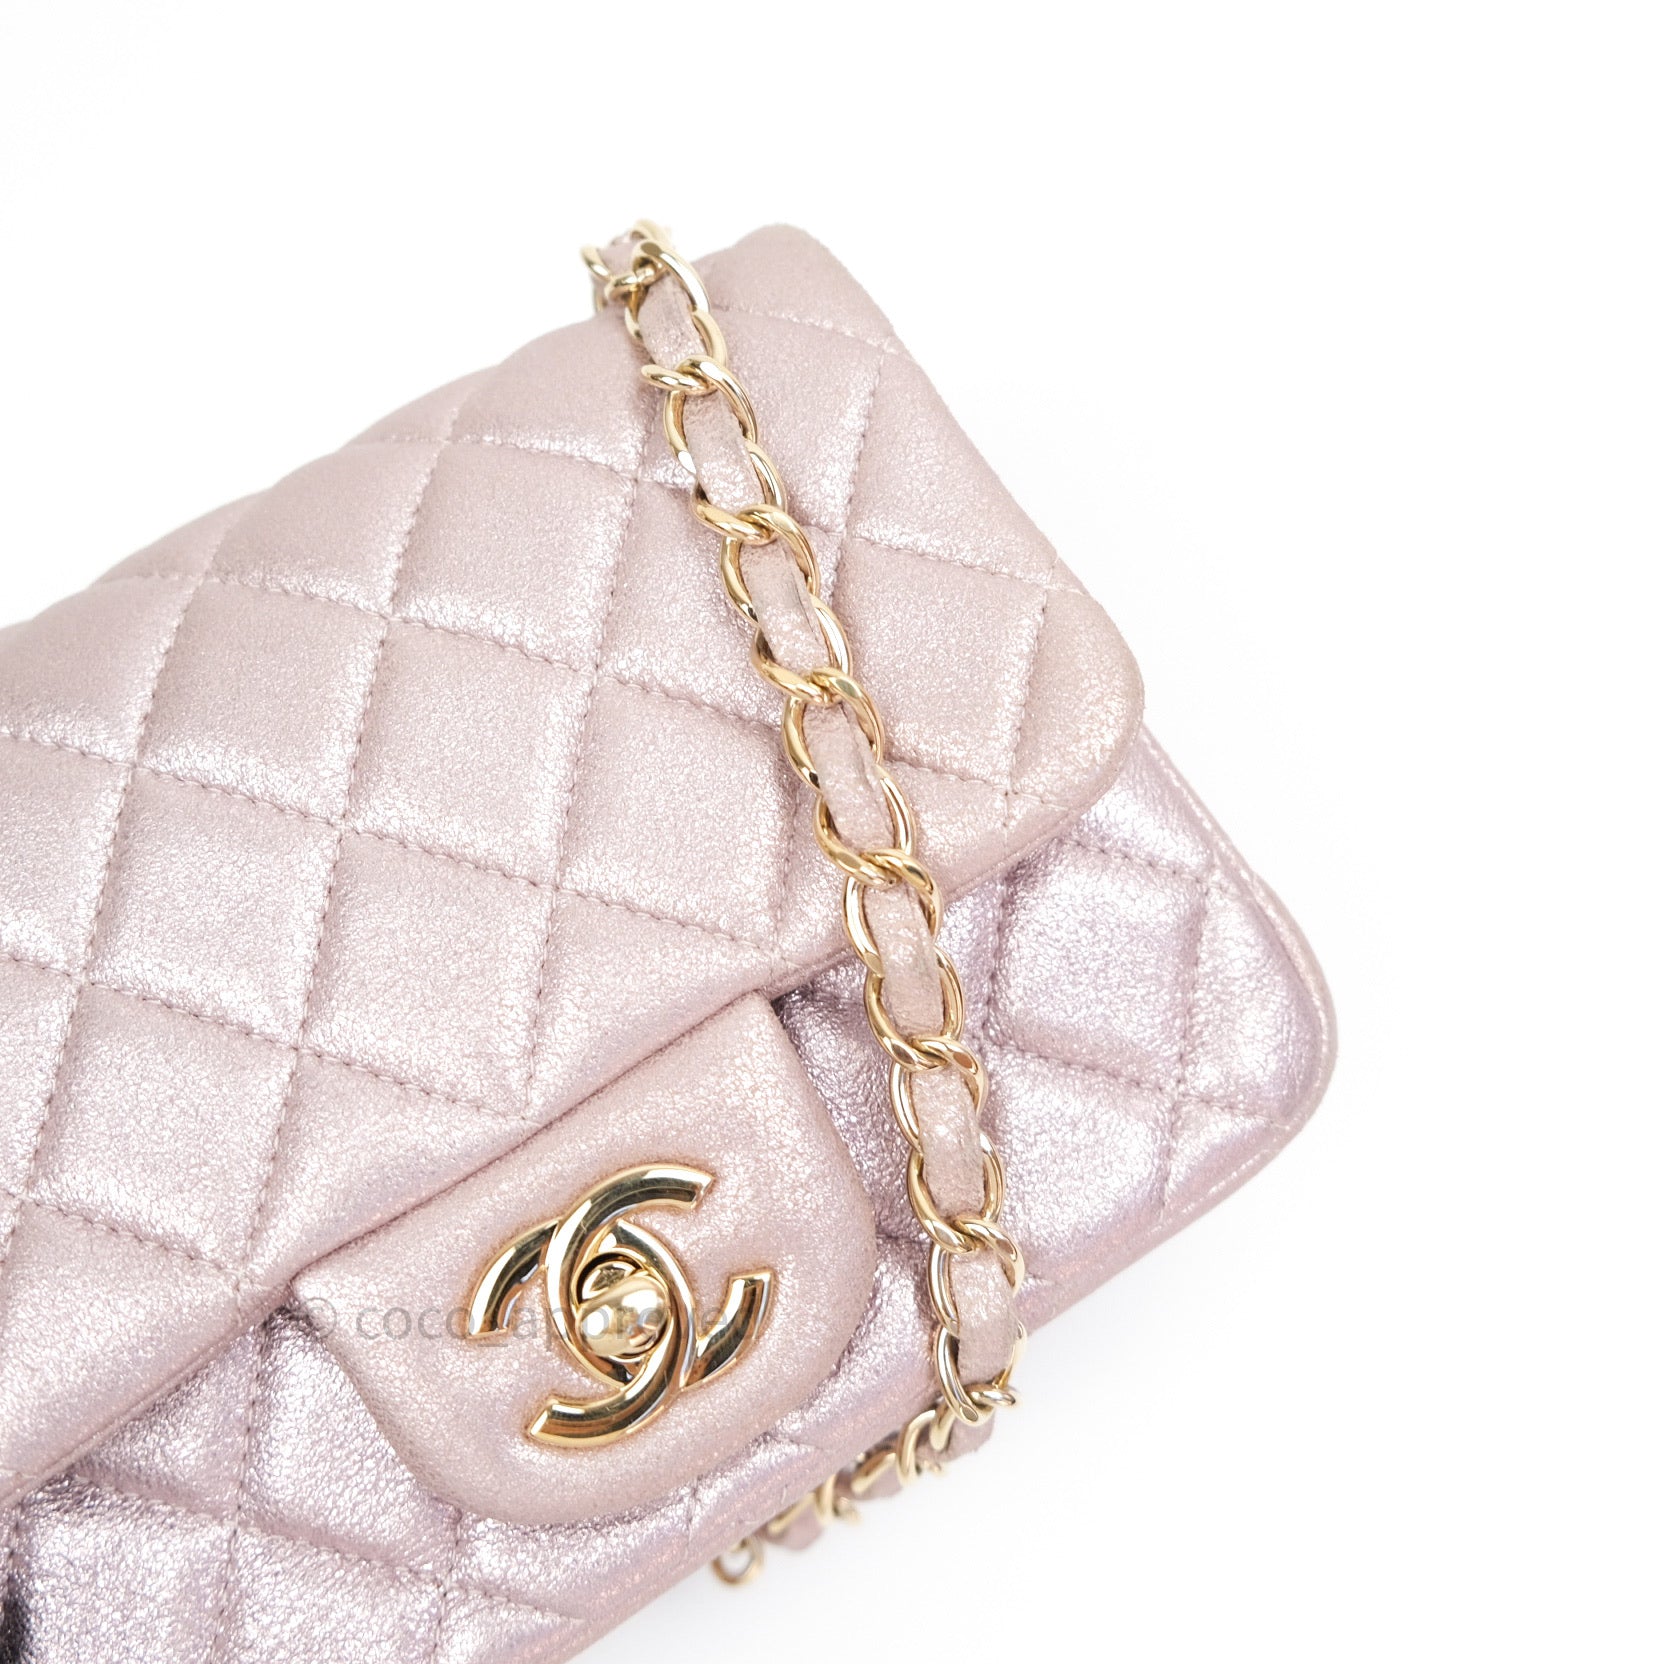 Chanel Mini Square Metallic Rose Gold Goatskin Gold Hardware 14B – Coco  Approved Studio